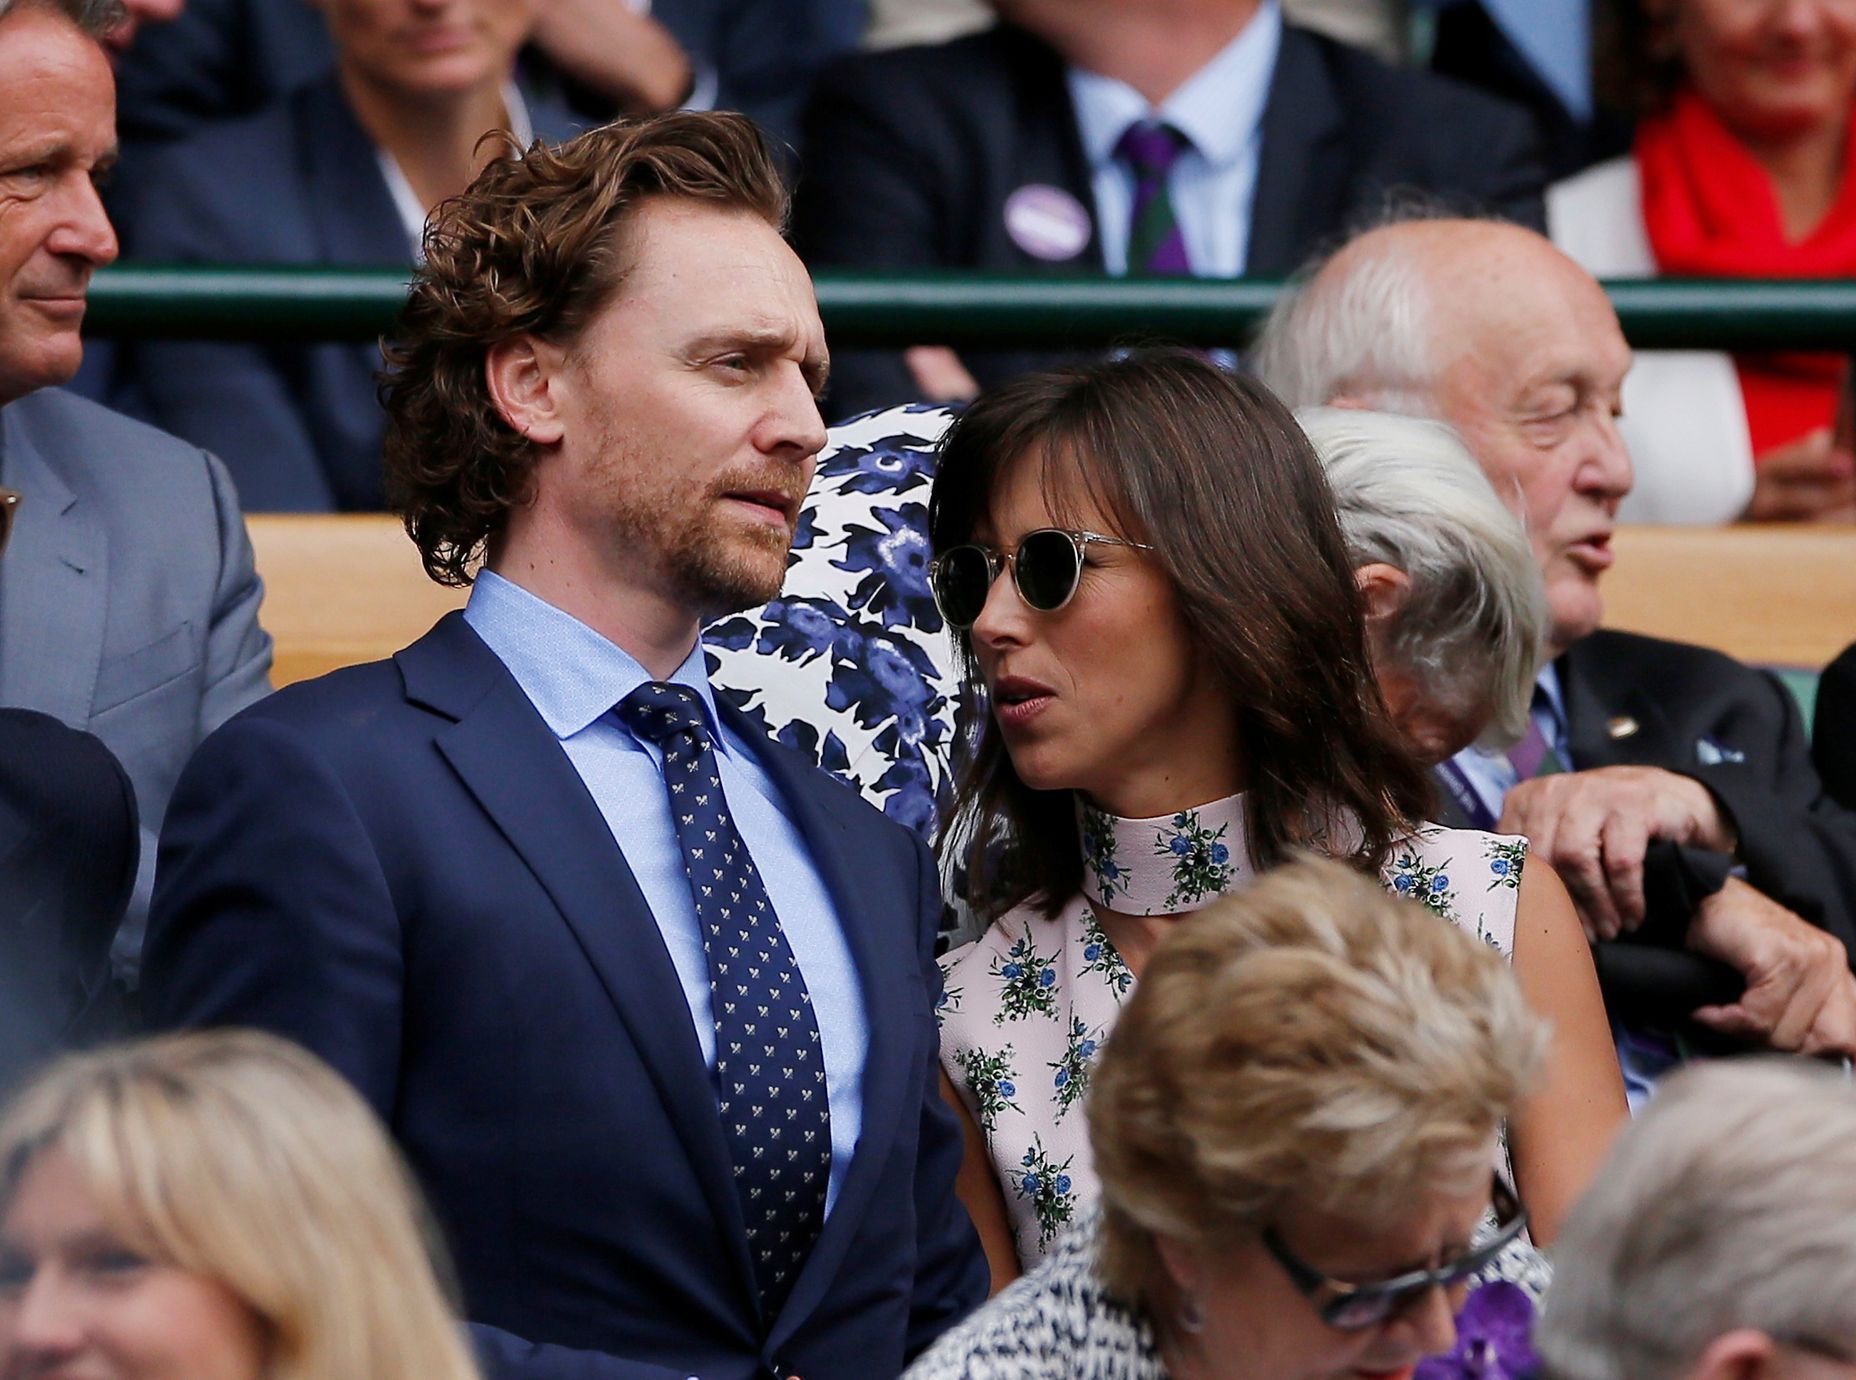 Finále Wimbledonu 2019: Tom Hiddleston